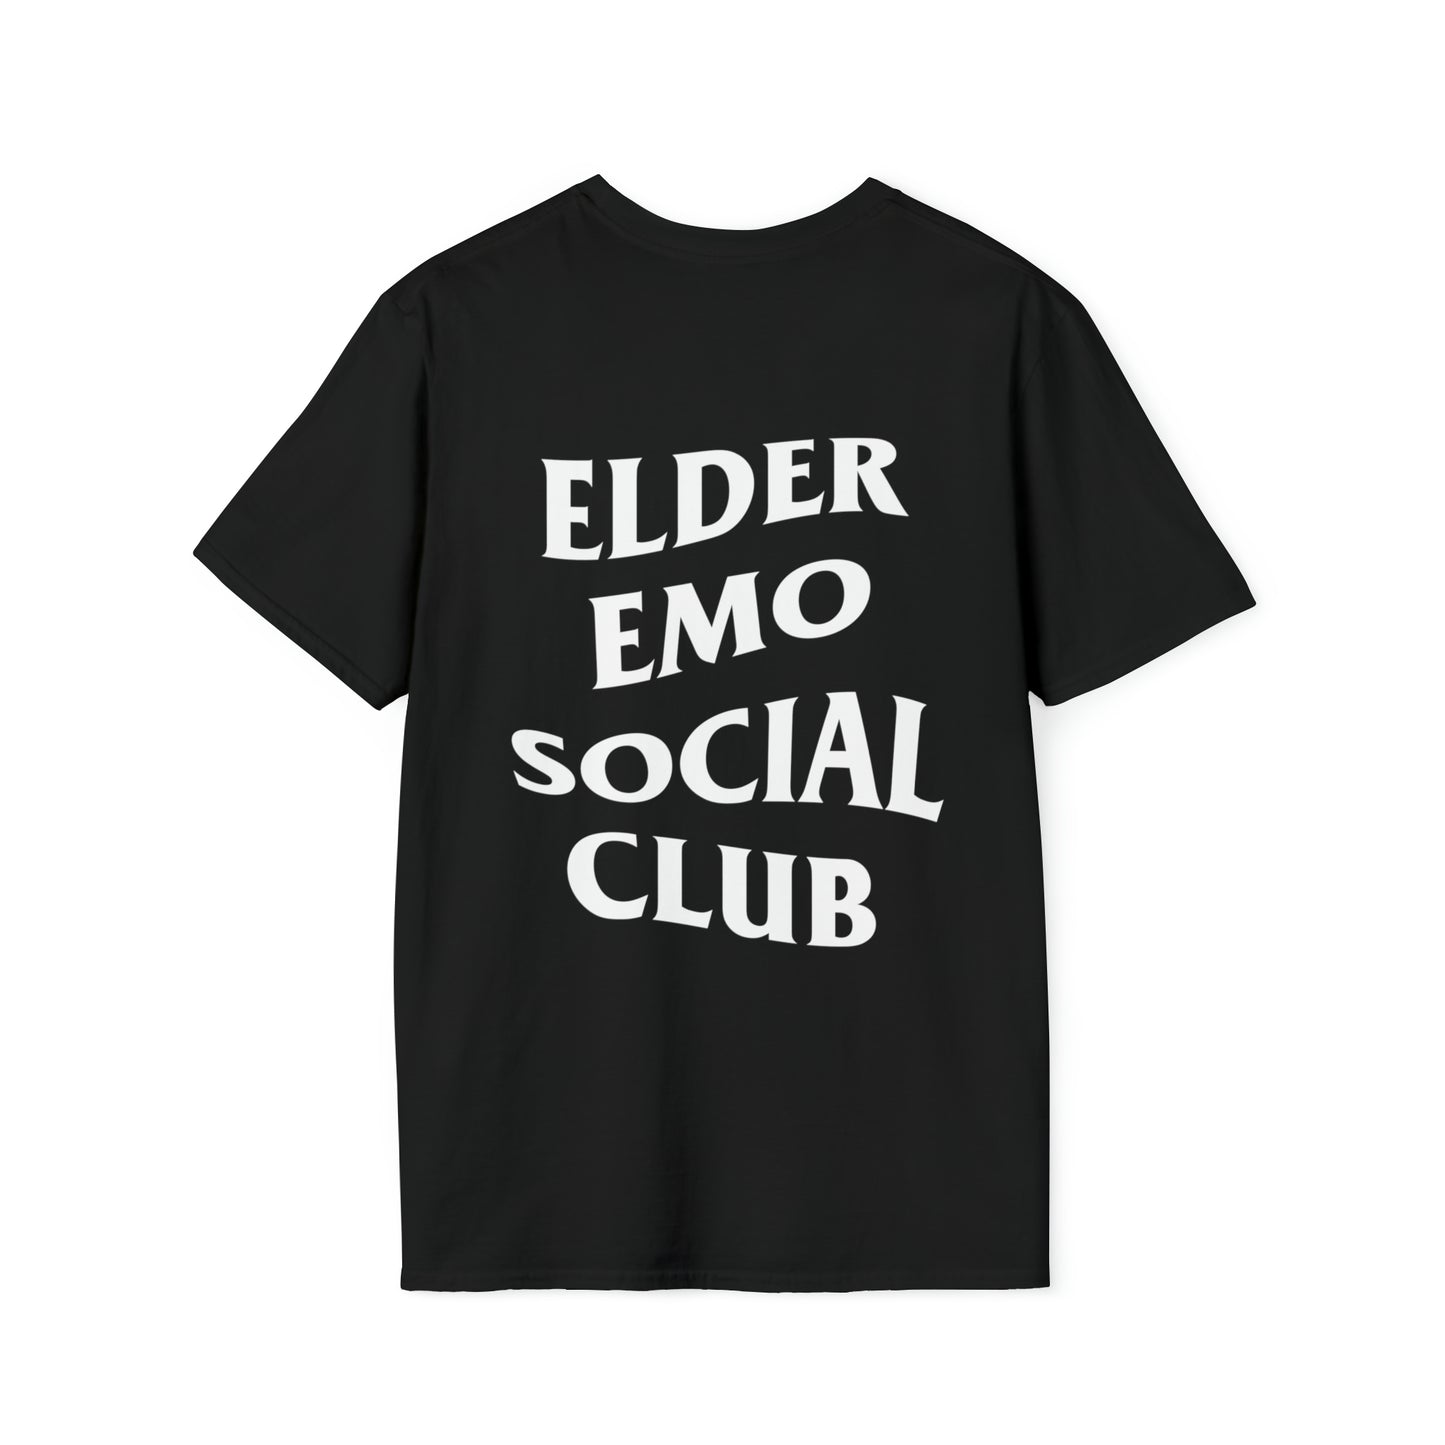 Elder Emo Social Club Tee